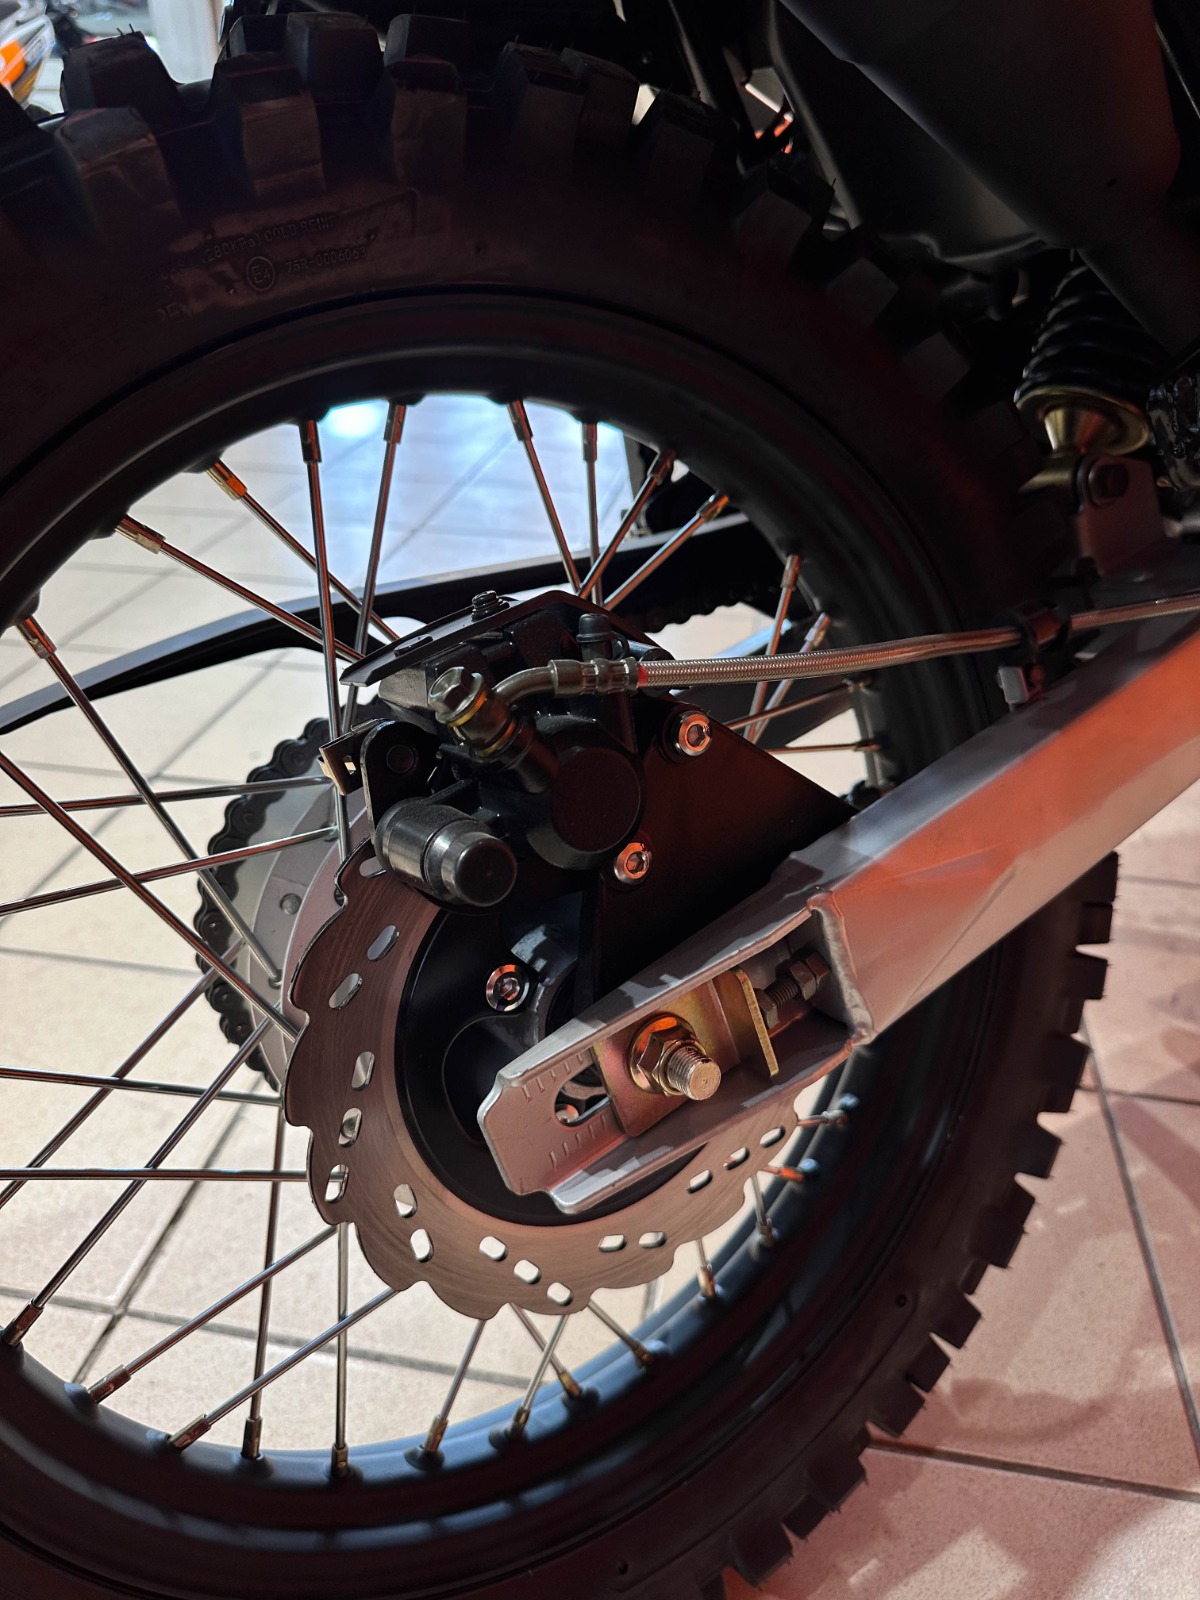 картинка Мотоцикл MotoLand XR 250 ENDURO (172FMM) | Moped24